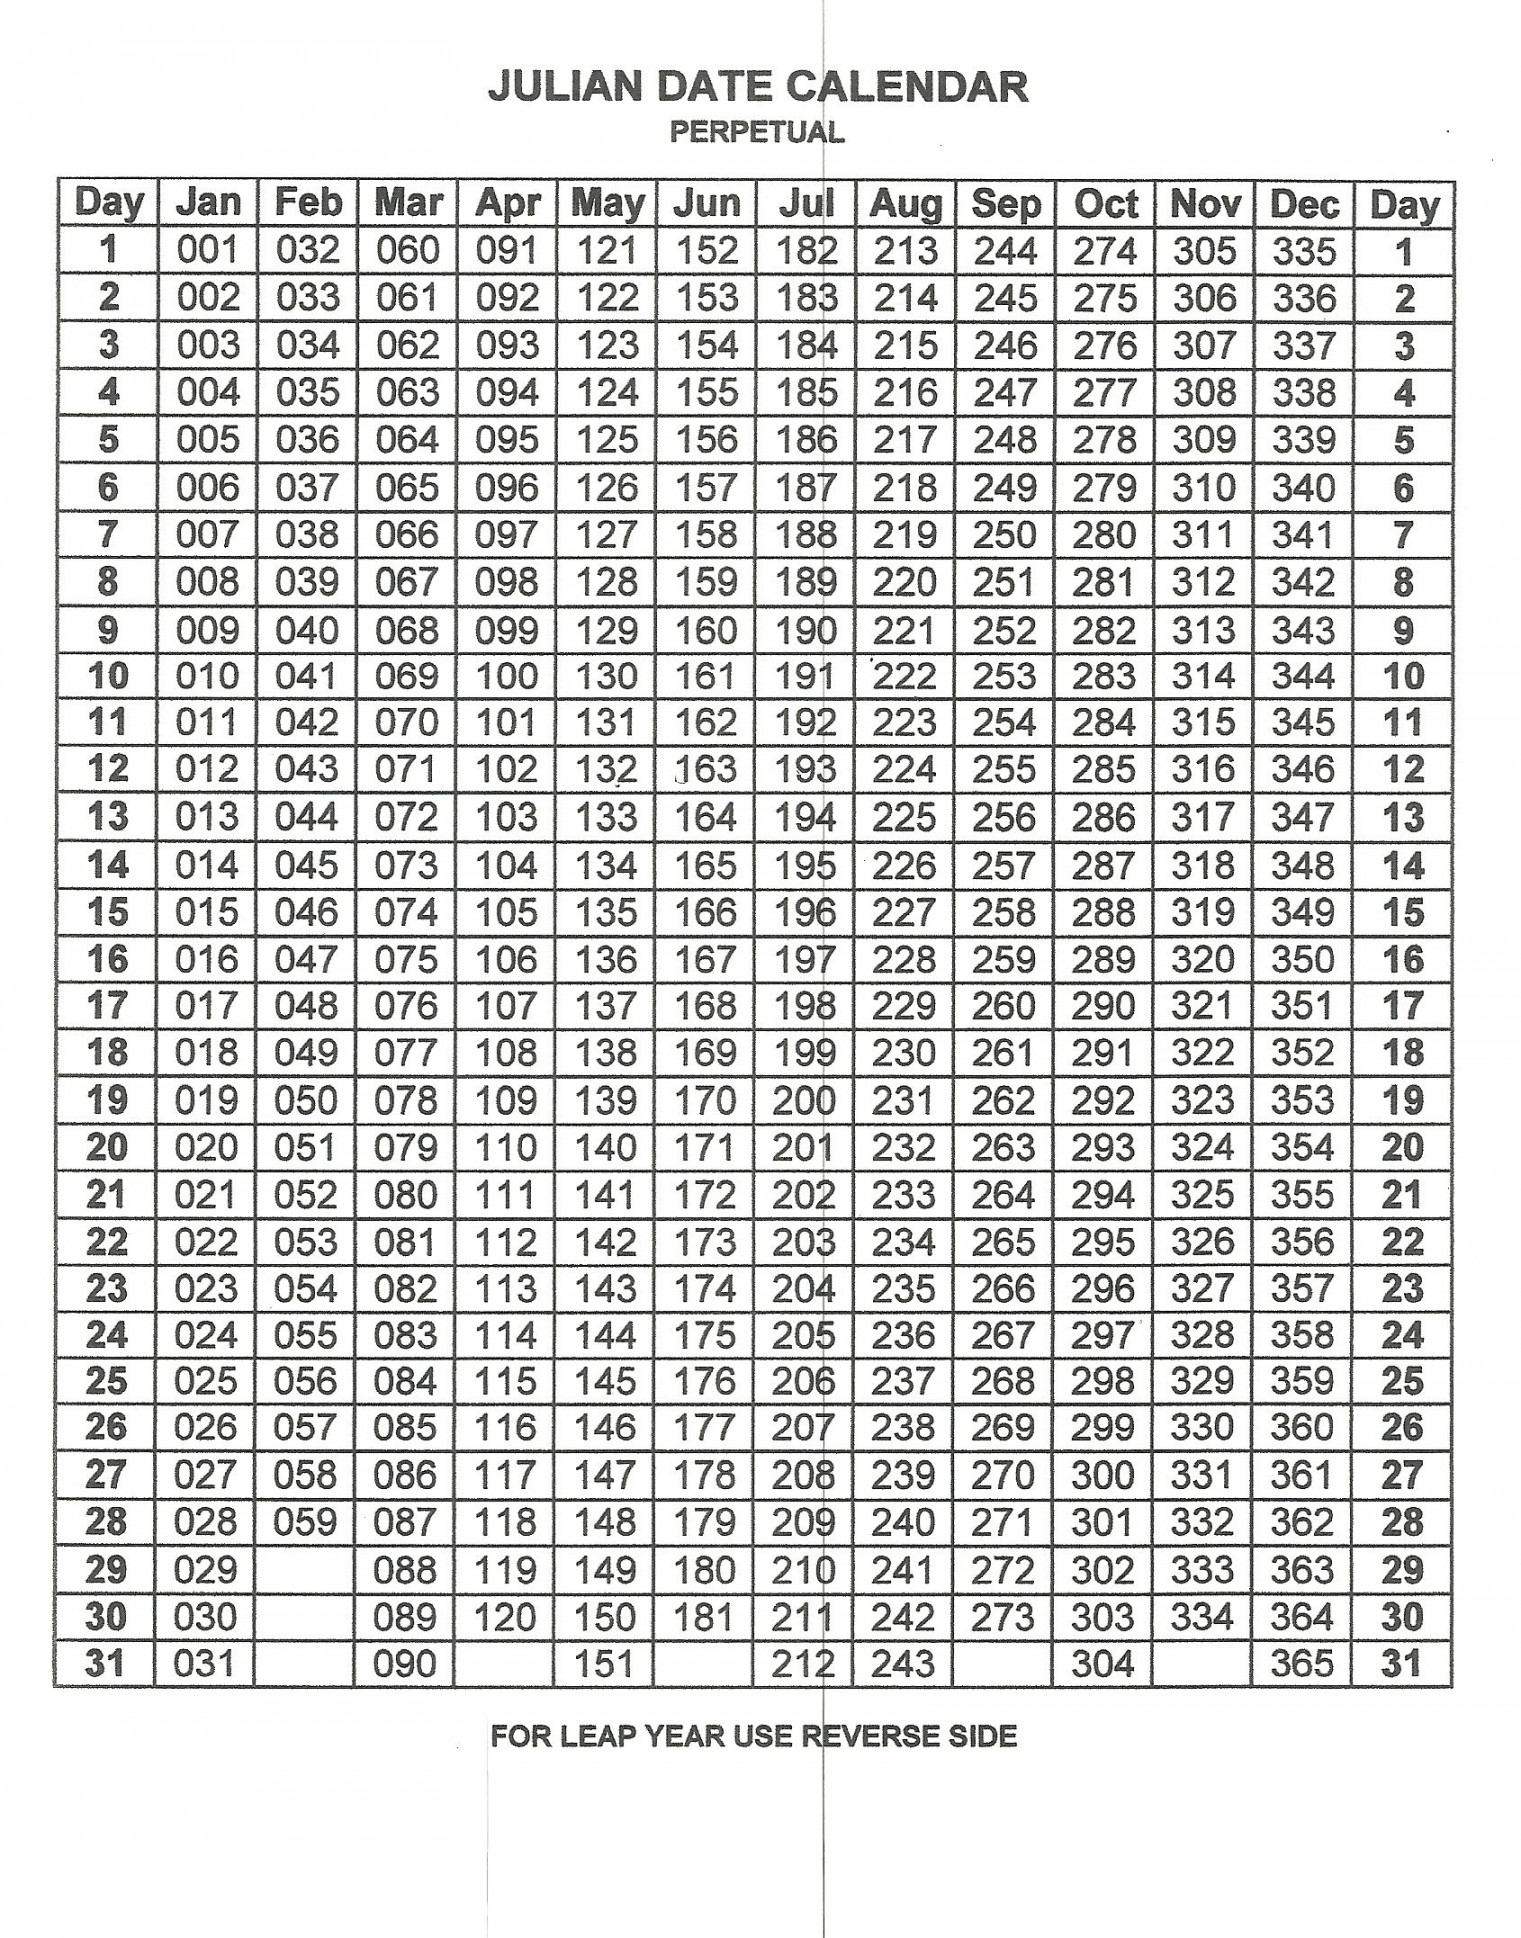 Perpetual Julian Date Calendar  Calendario, Dia juliano, Fechas